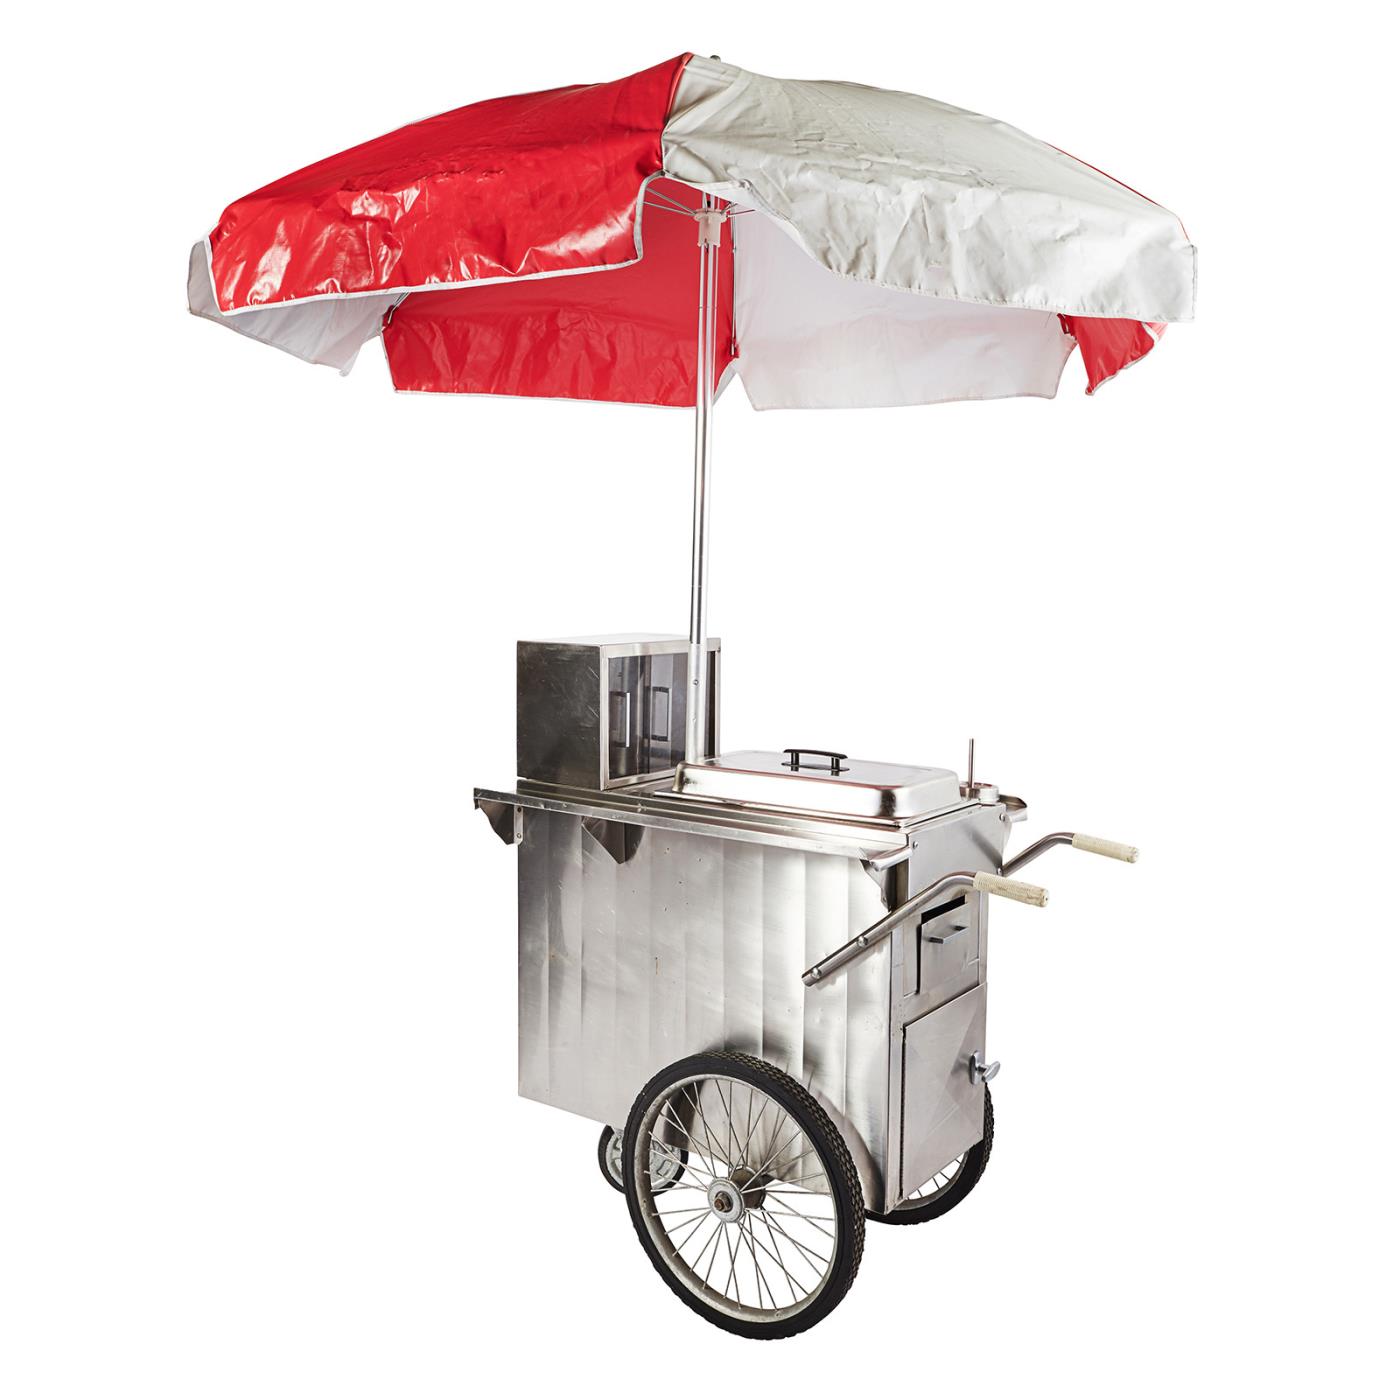 Hot Dog Cart Umbrella - Red & White